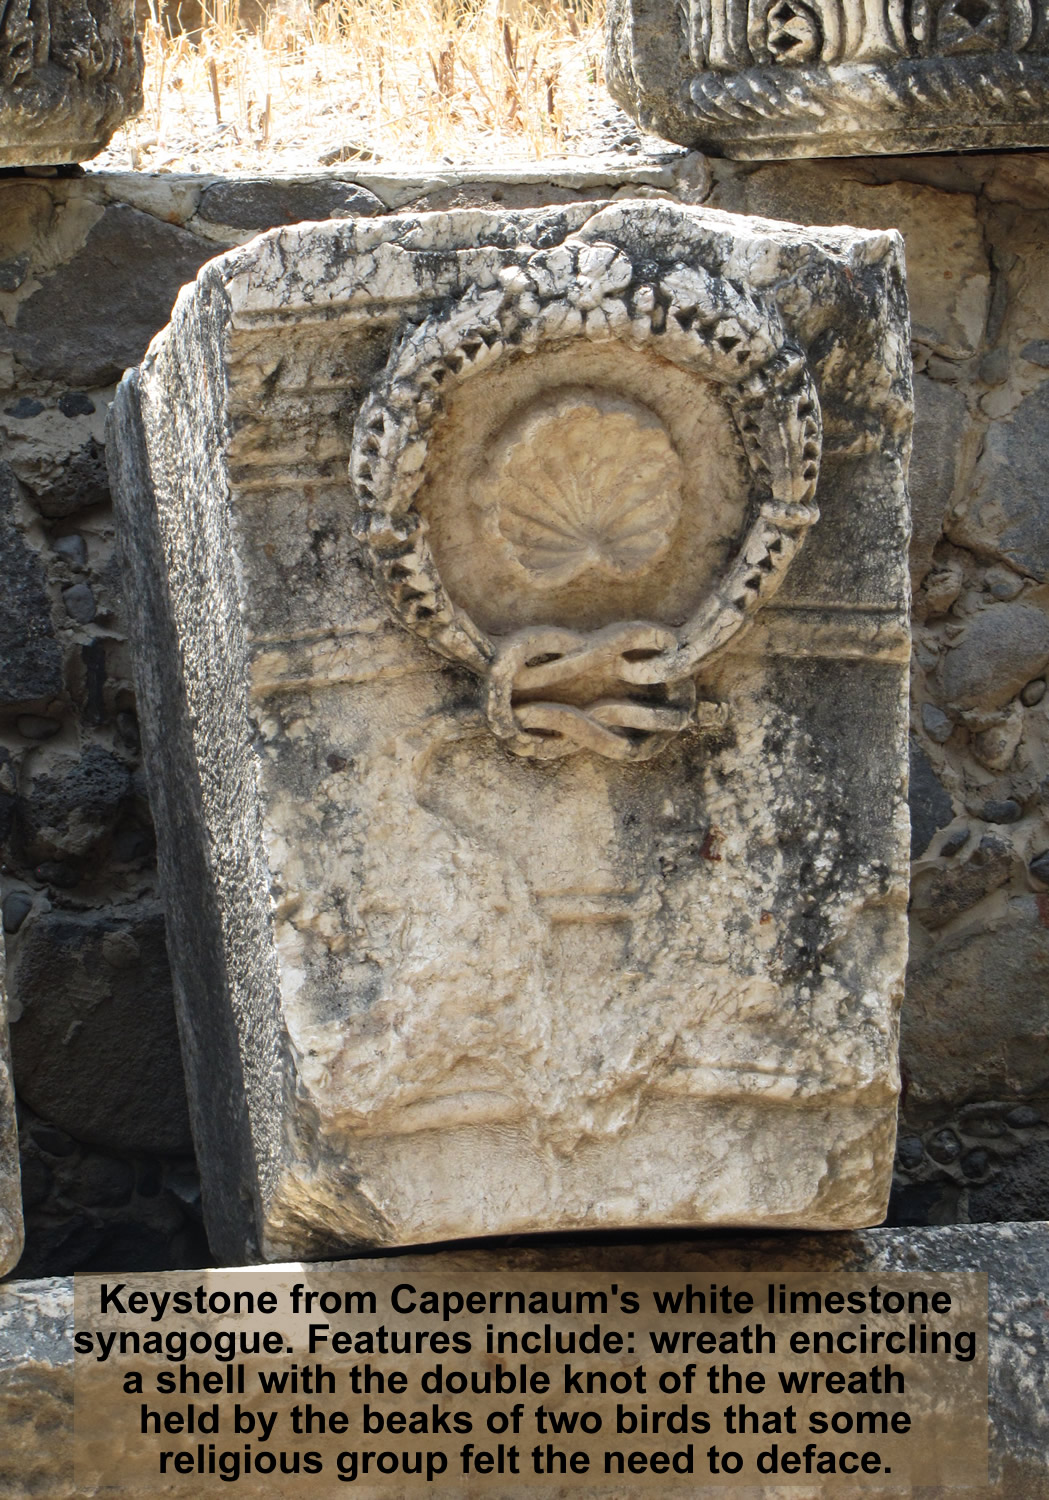 Keystone from white limestone synagogue in Capernaum